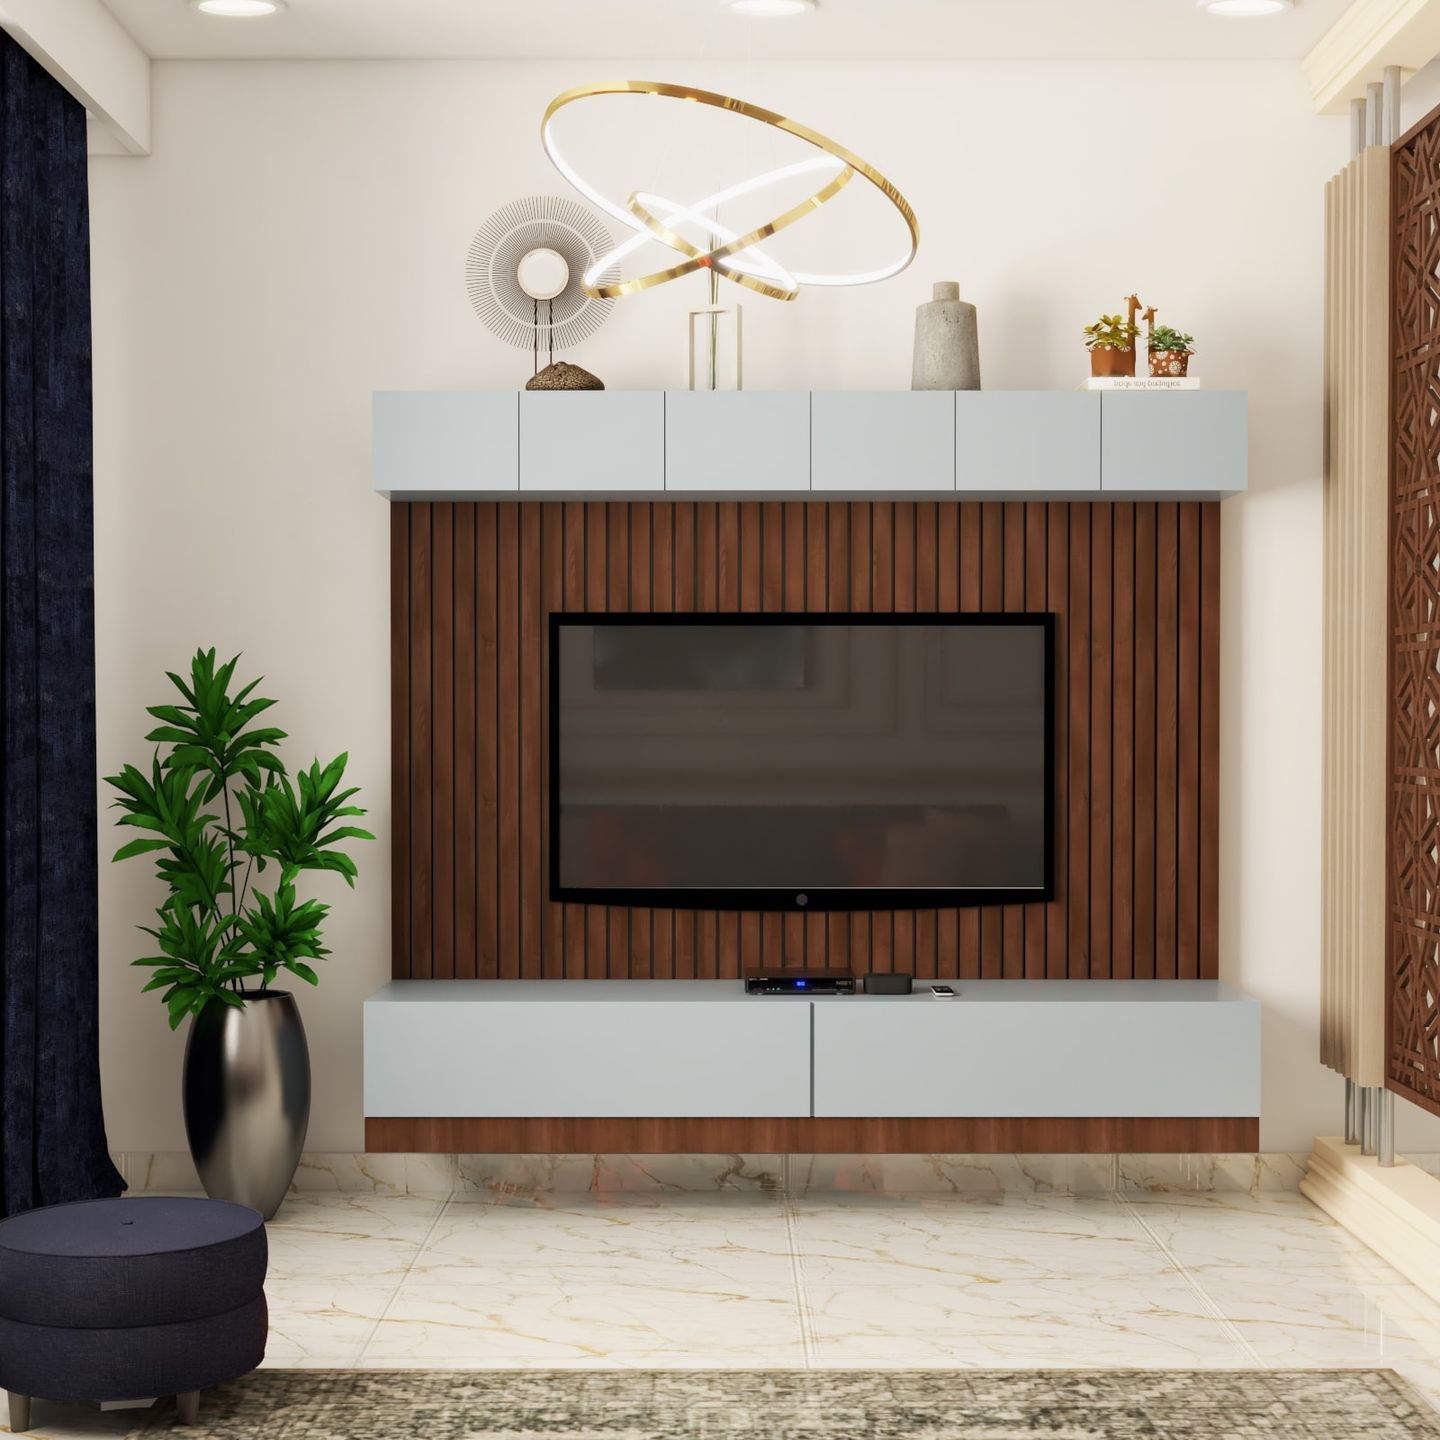 Rustic TV Unit Design with Dark Wooden Panels - Livspace